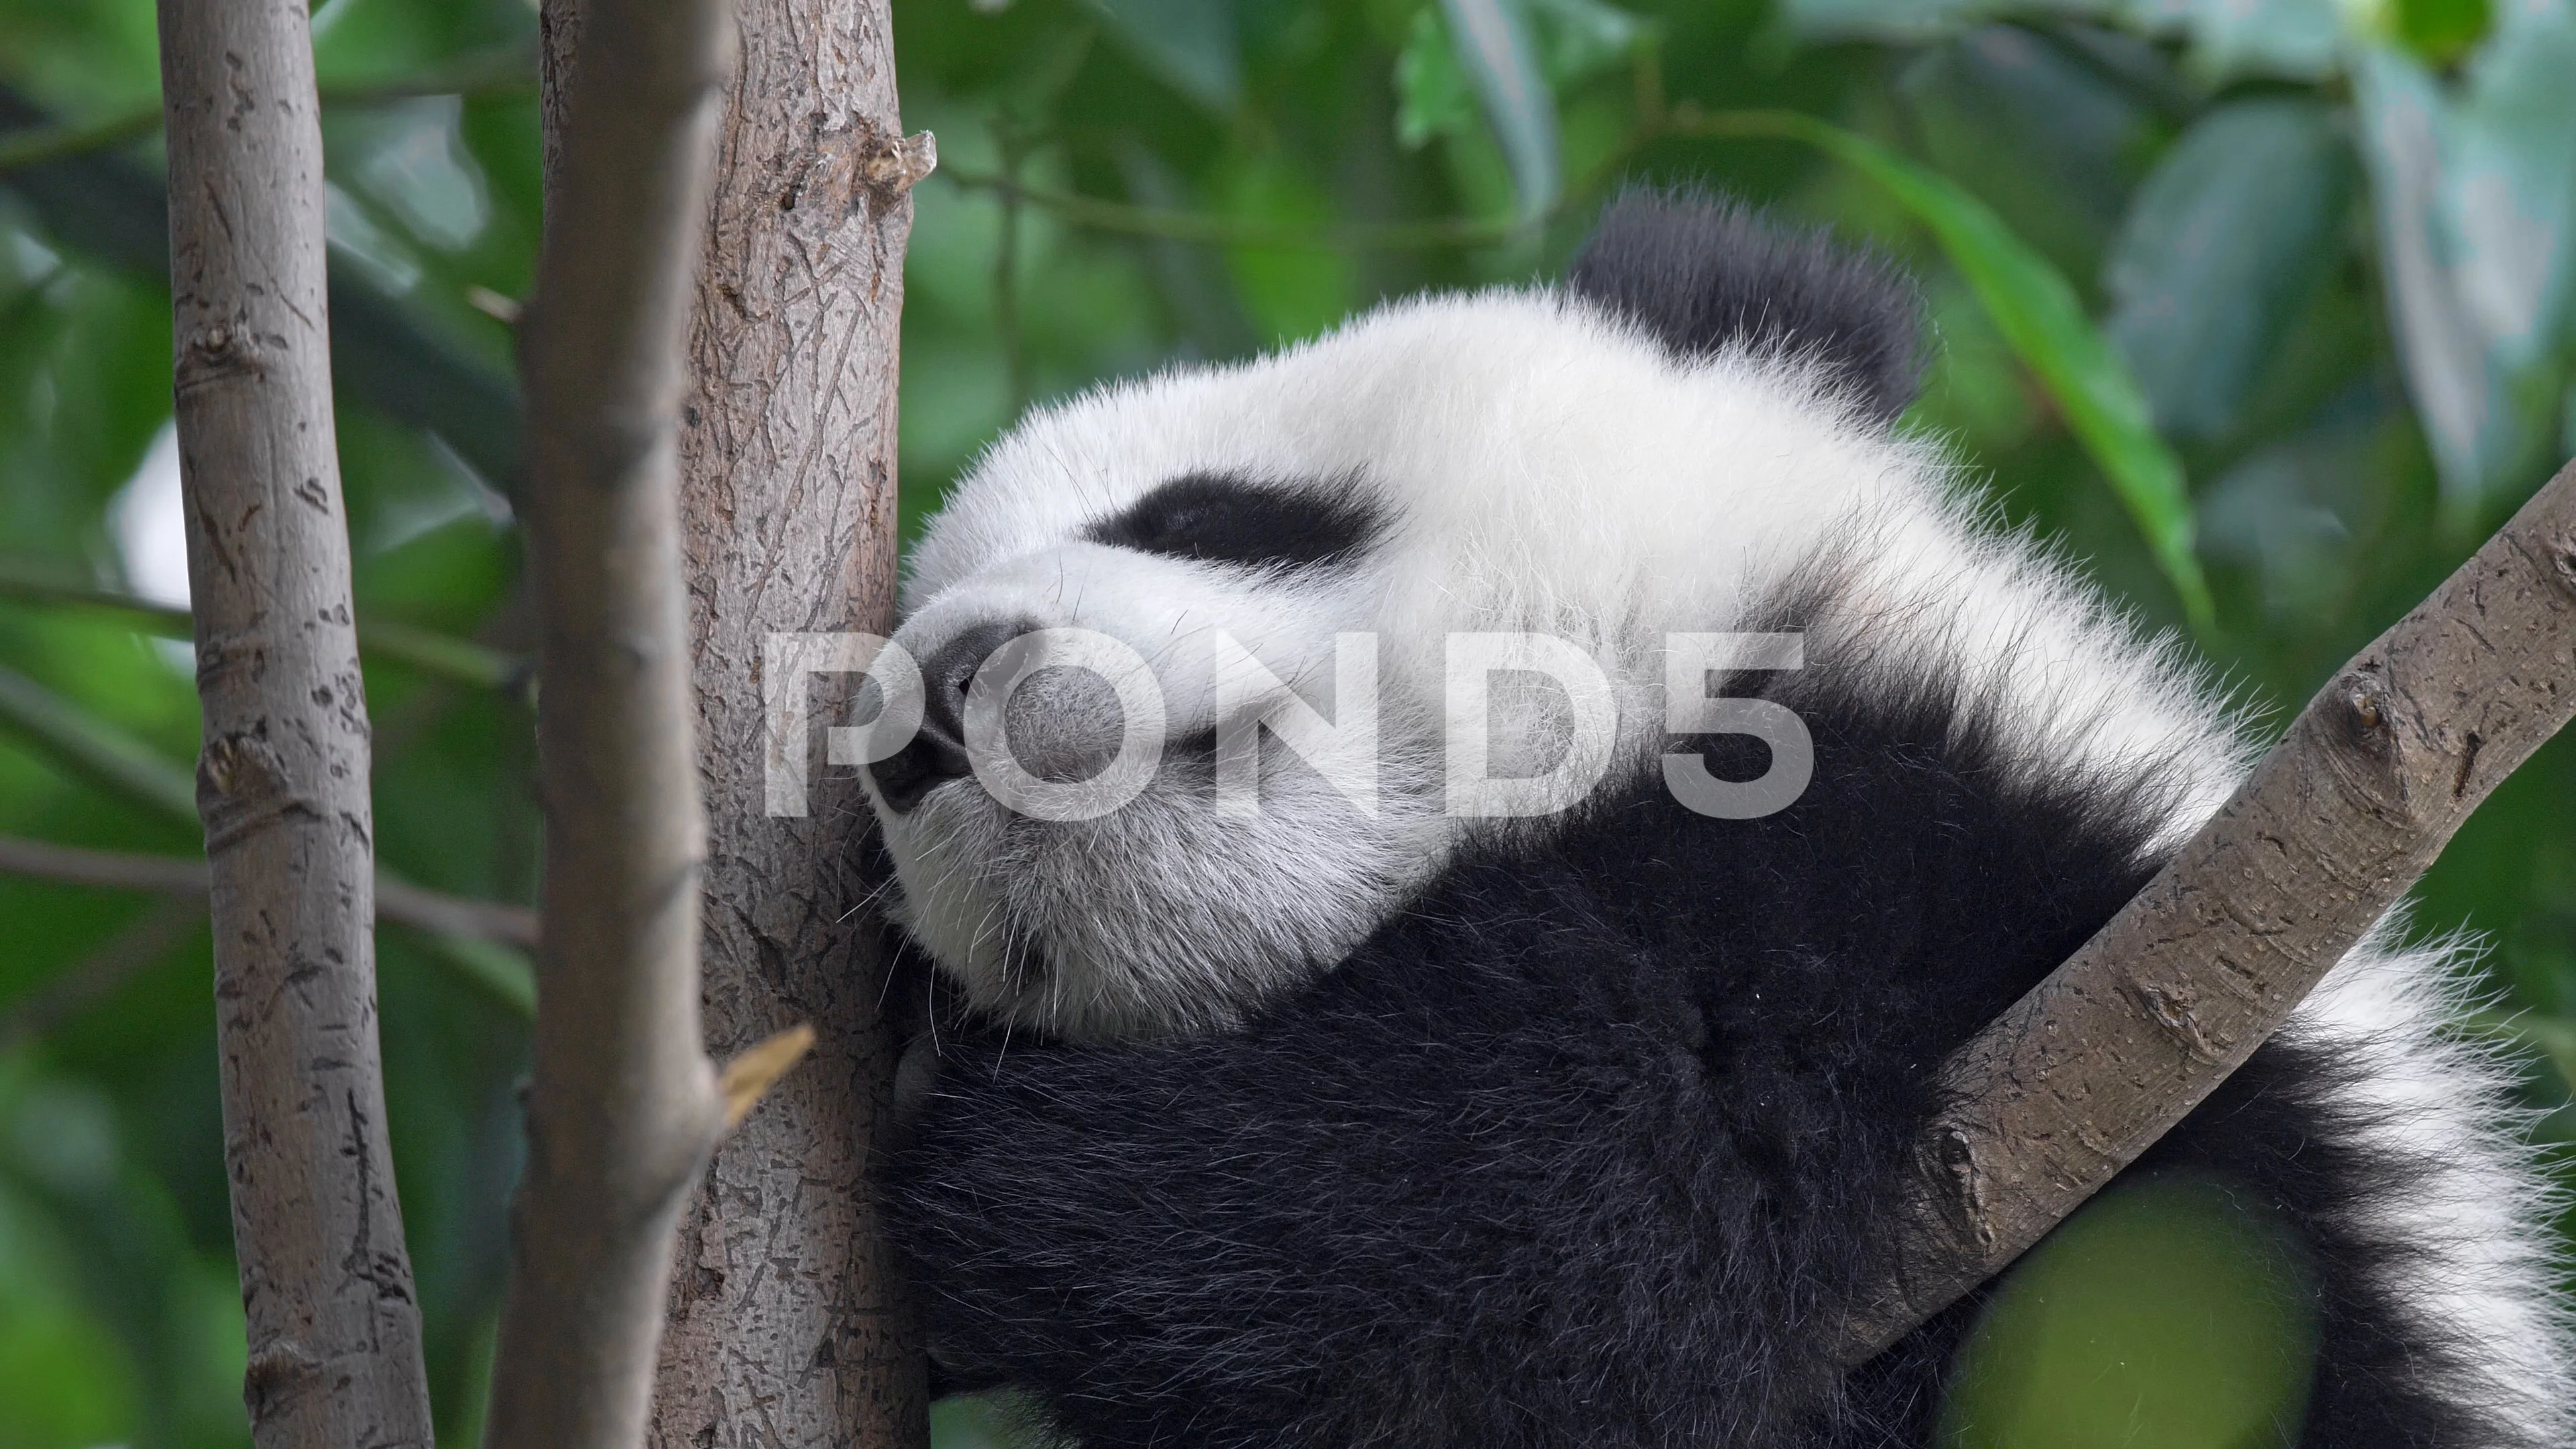 cute baby pandas sleeping